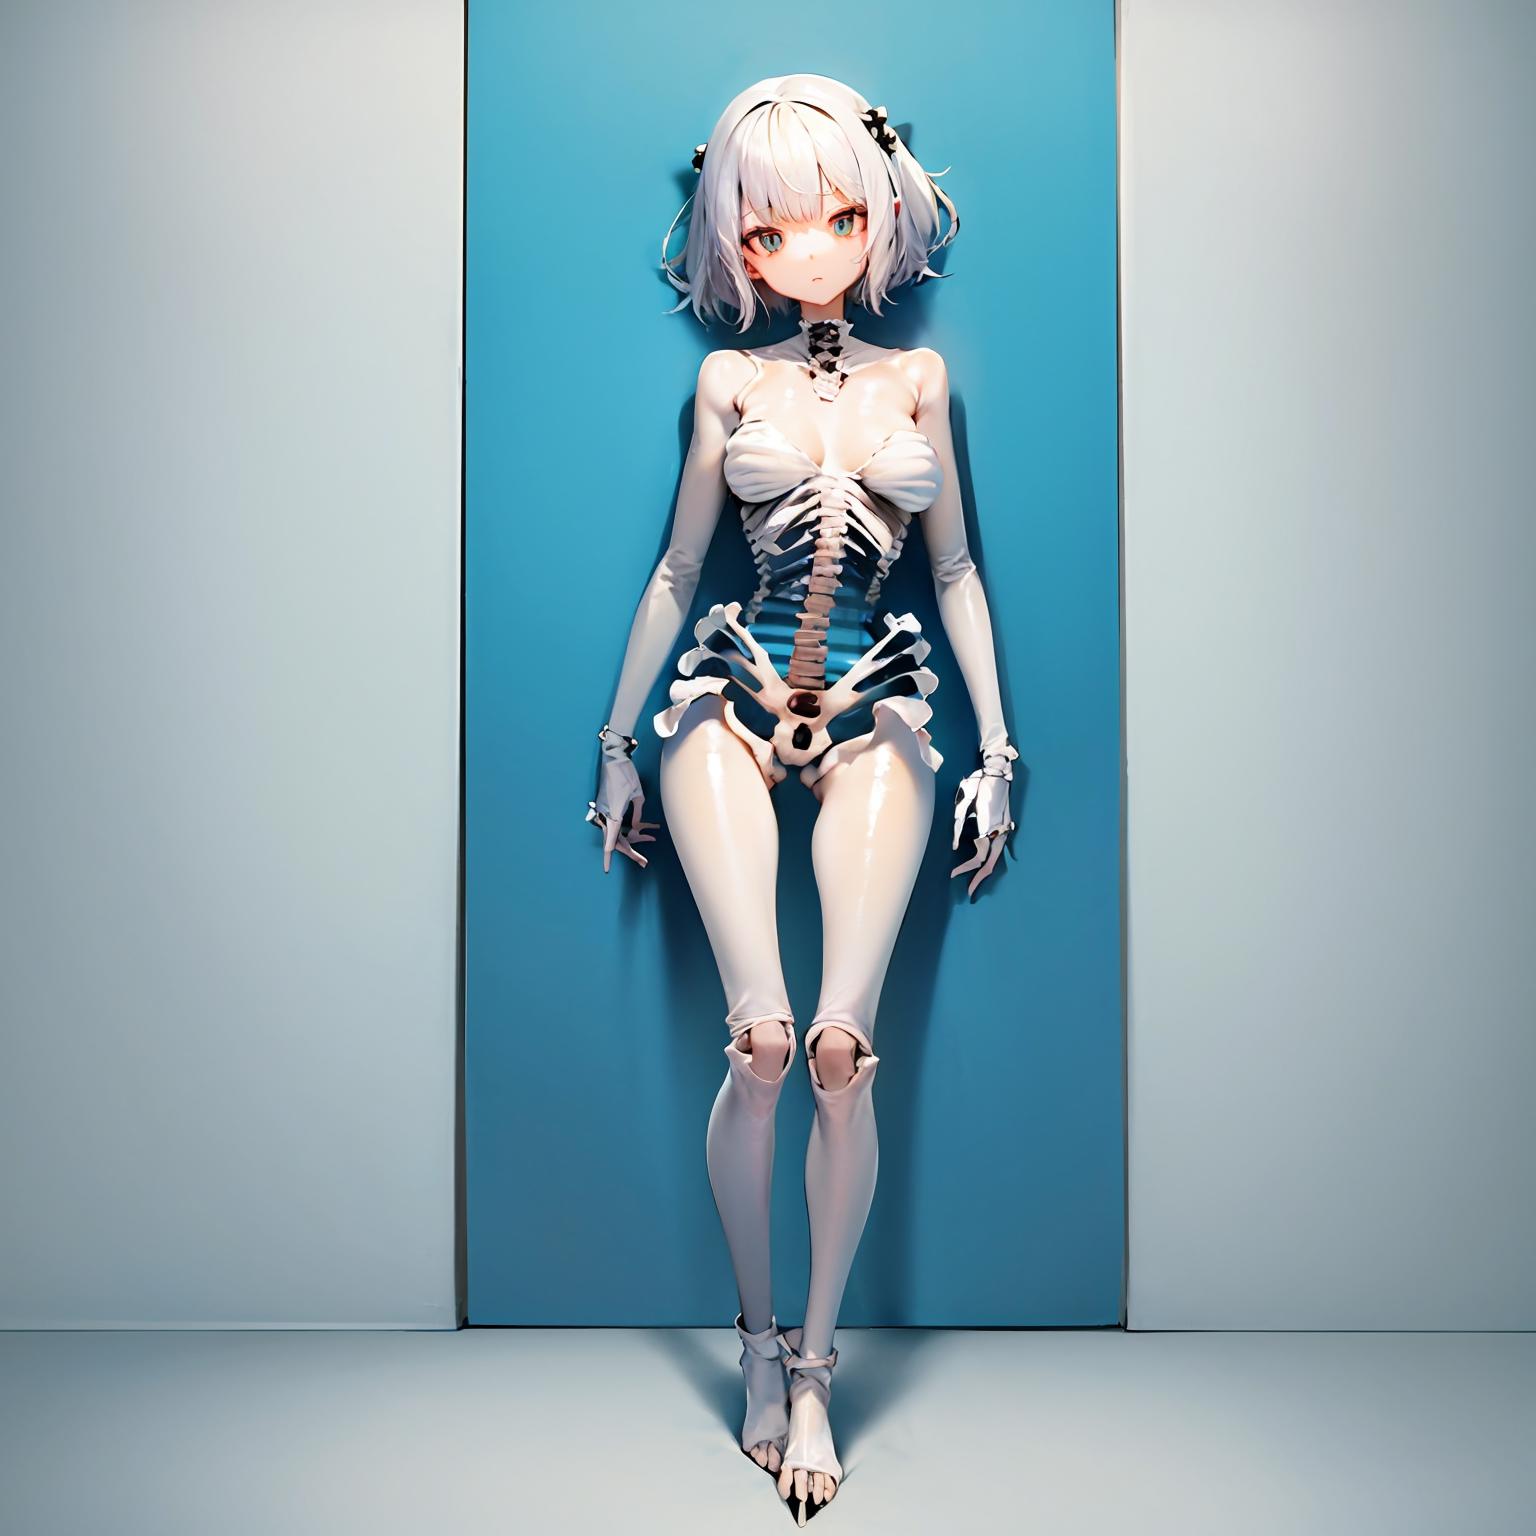 Special Skeleton Style 骨感美少女风格 image by ttplanet